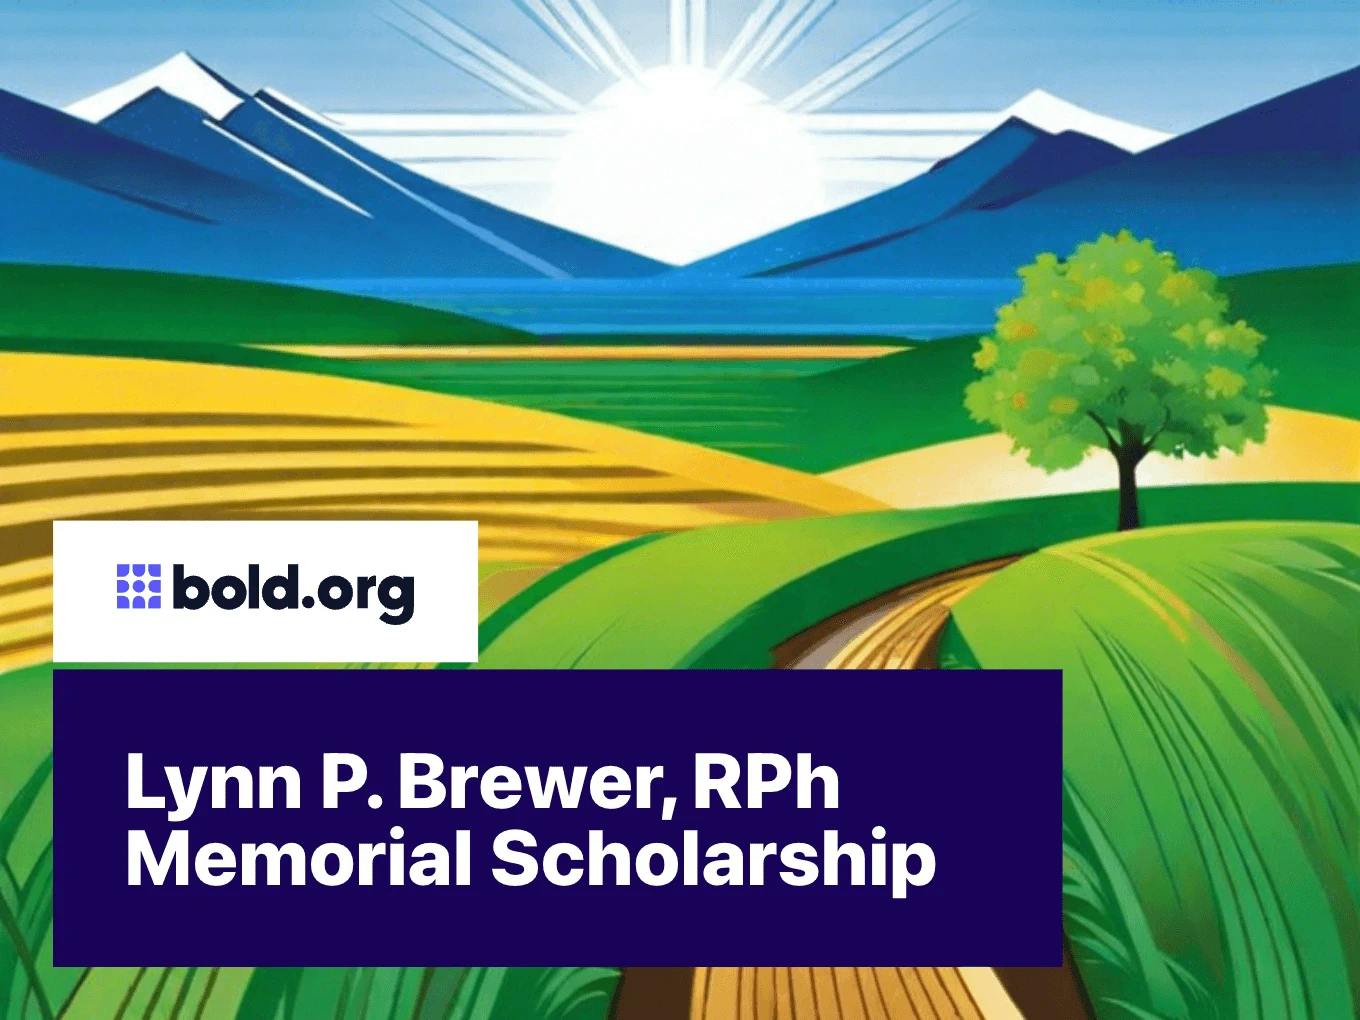 Lynn P. Brewer, RPh Memorial Scholarship